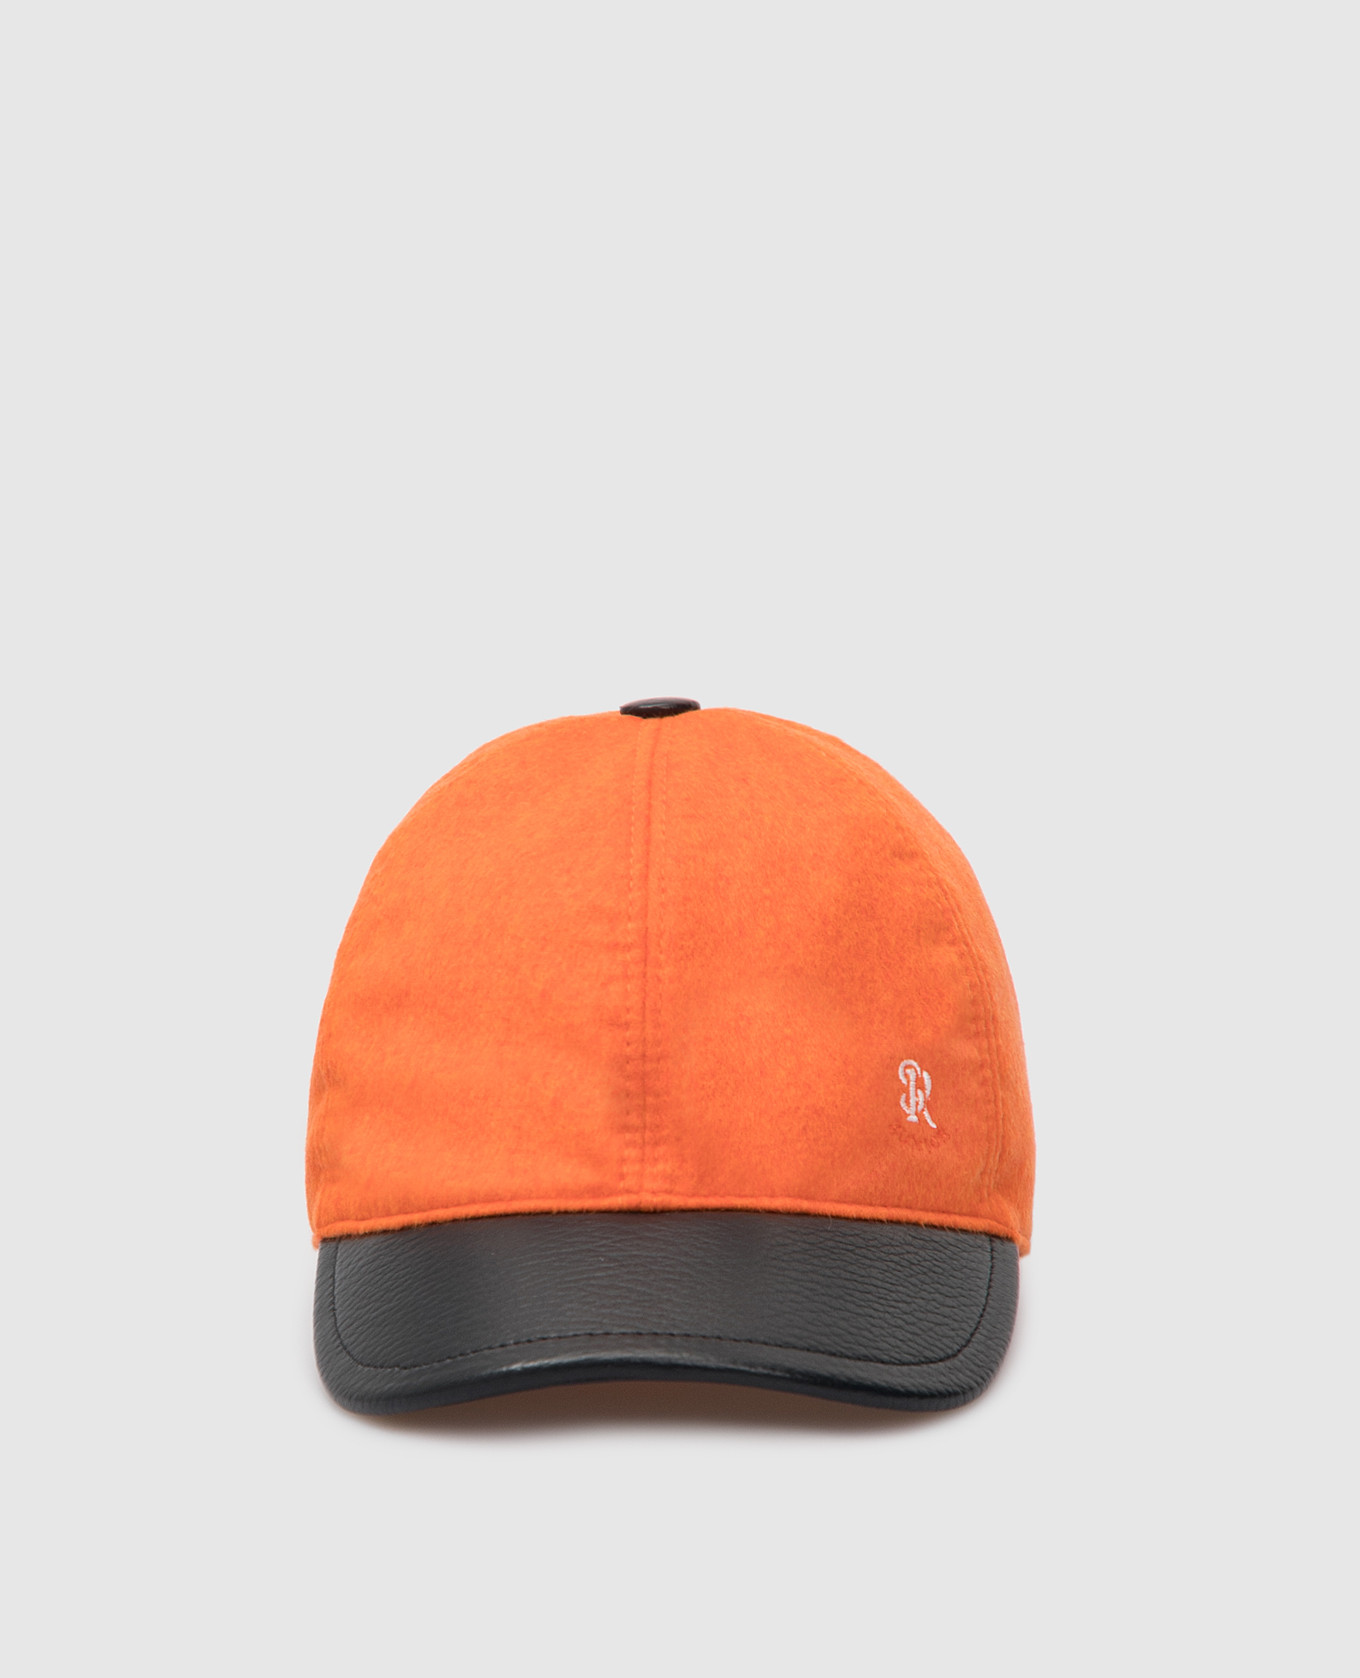 Monogram children's orange wool and leather cap